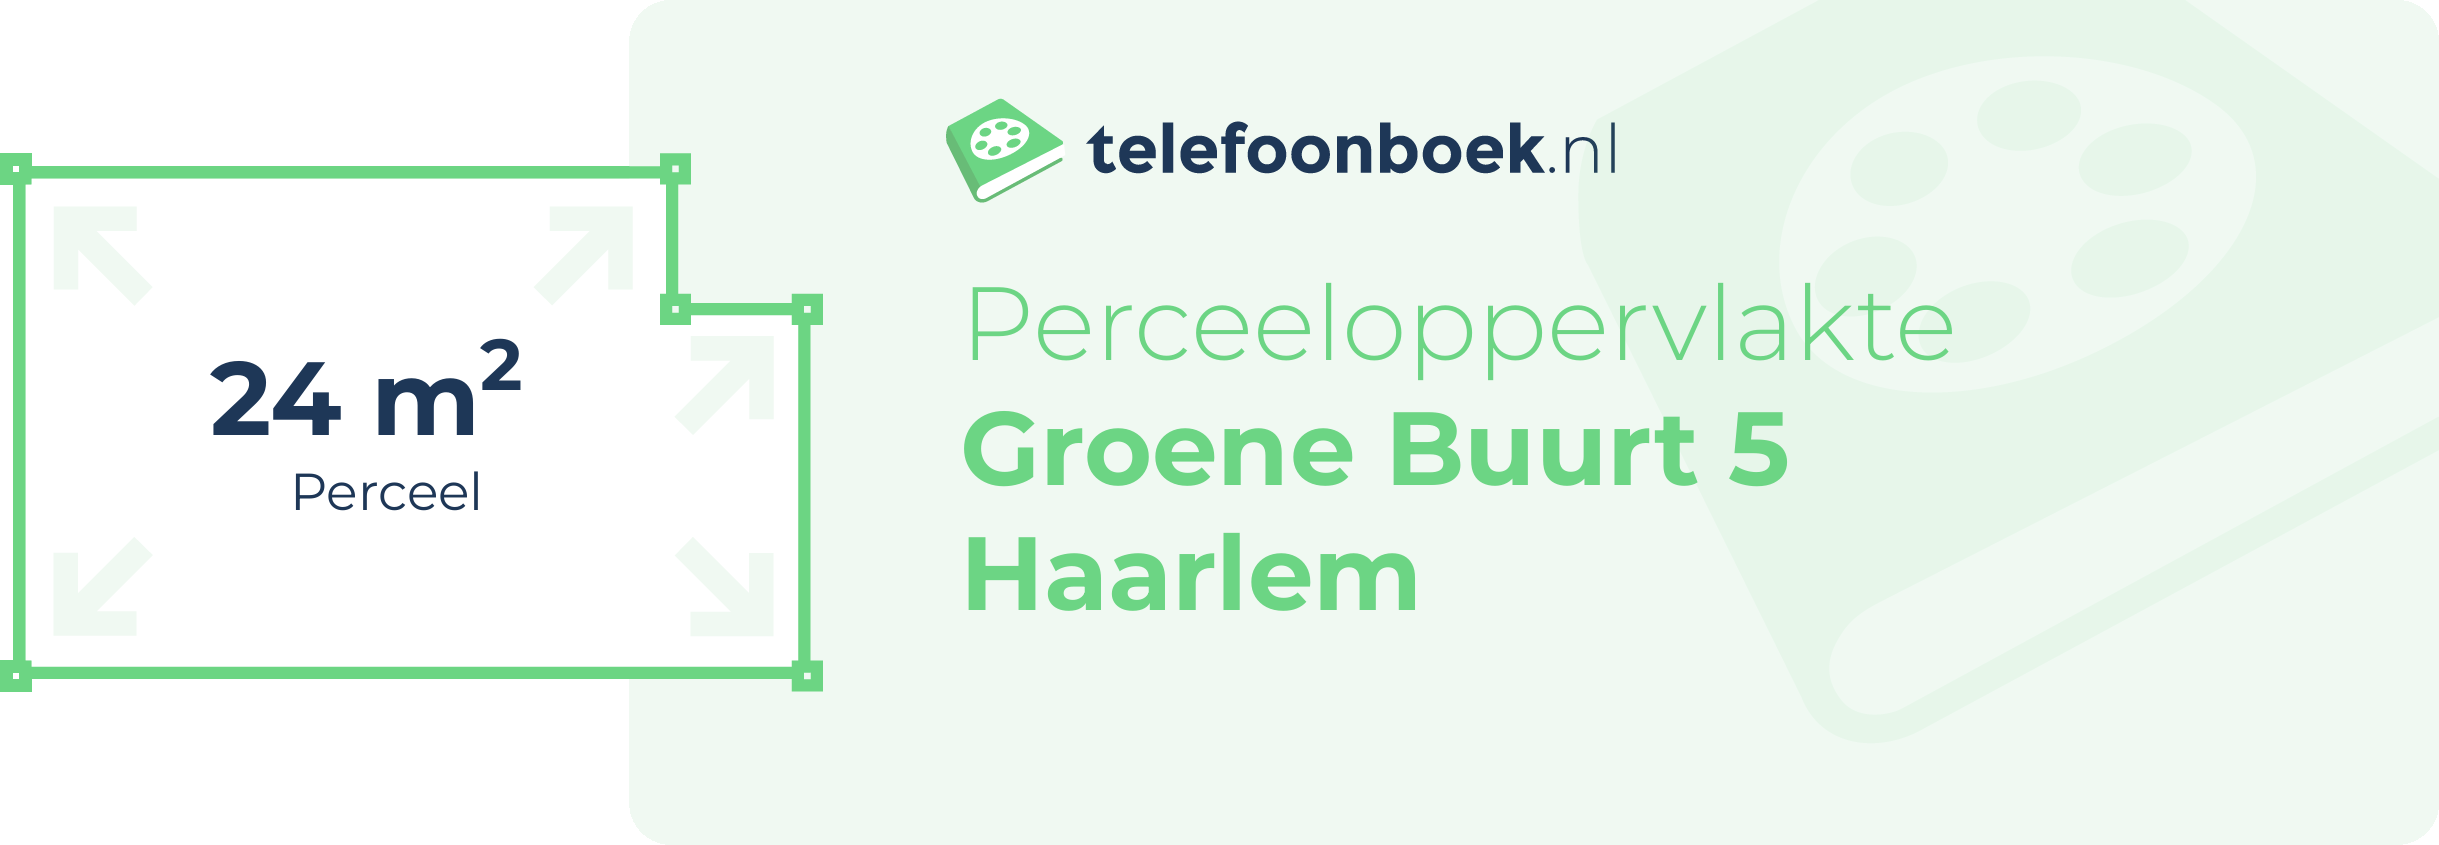 Perceeloppervlakte Groene Buurt 5 Haarlem